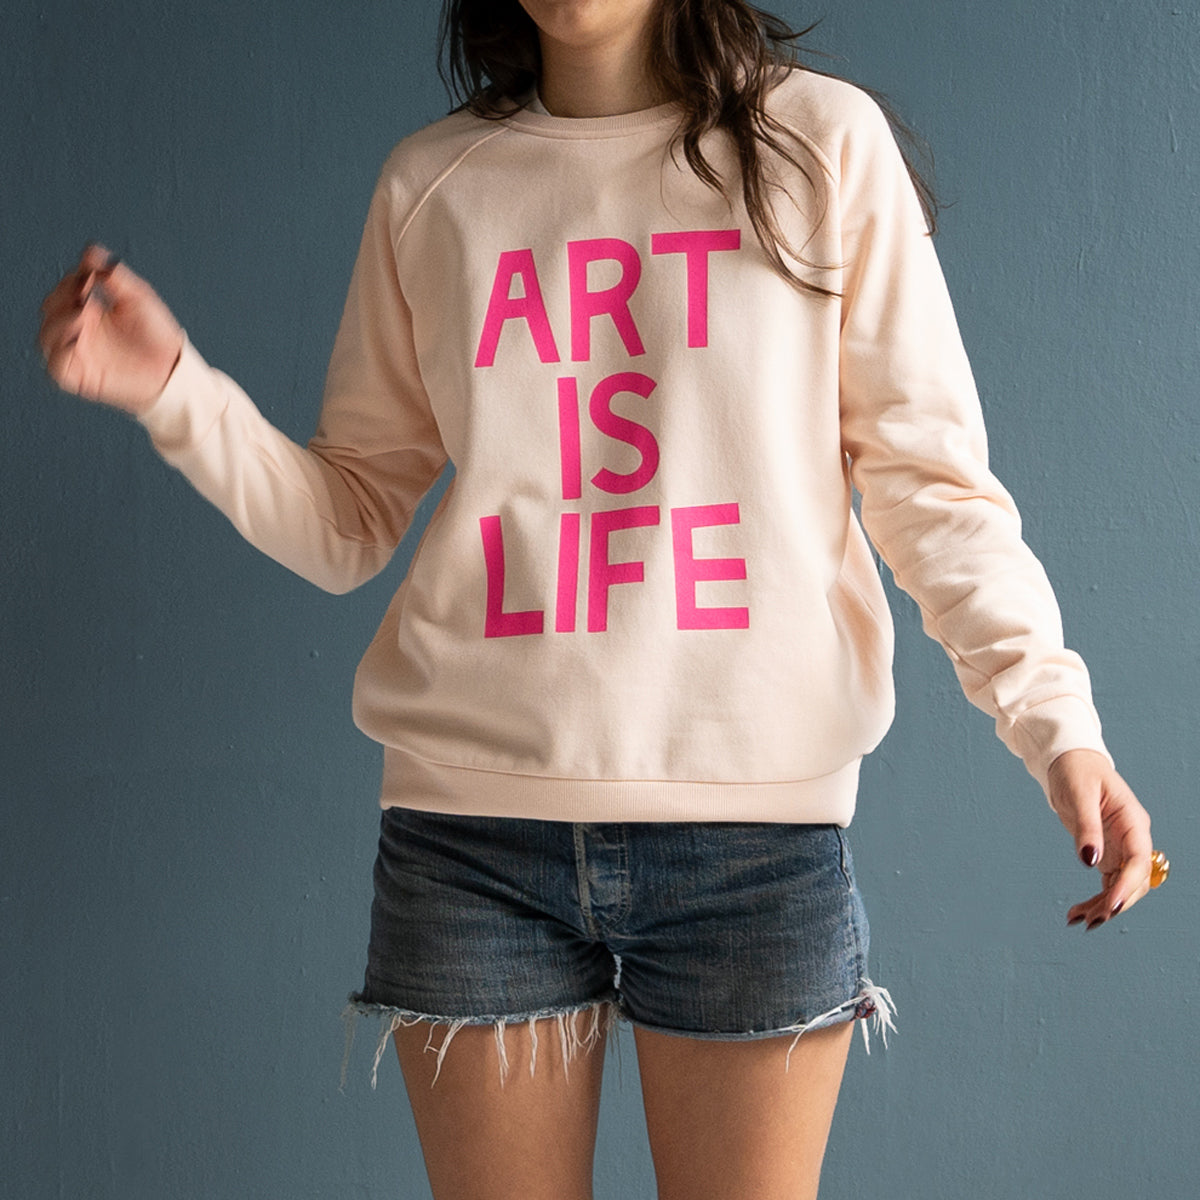 ART IS LIFE